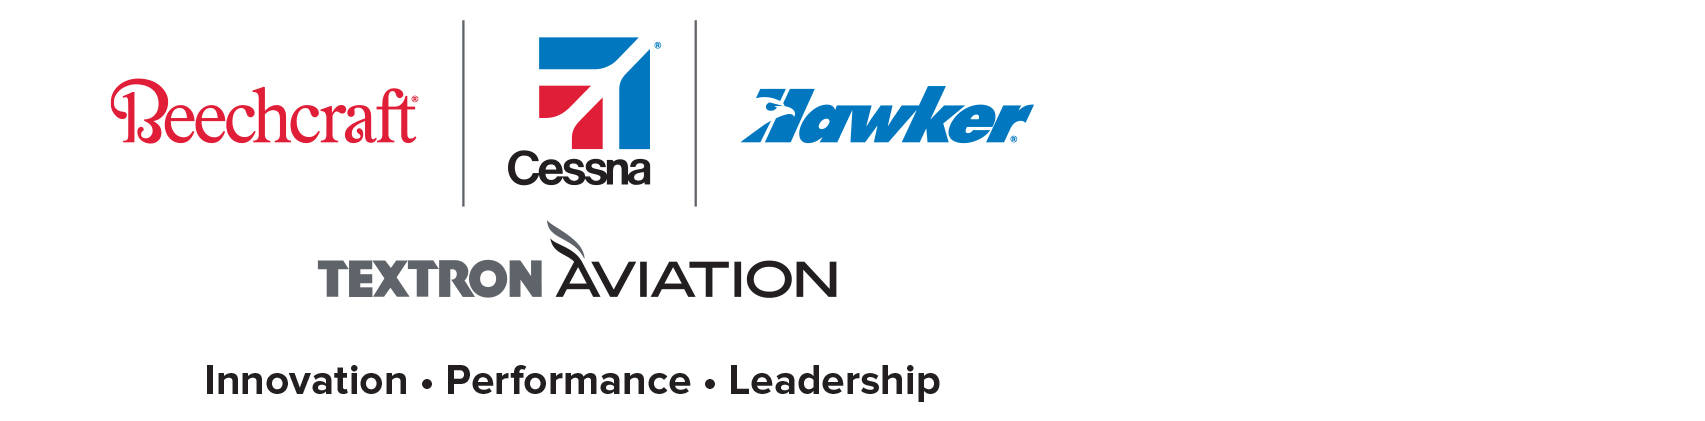 Textron Aviation. Innovation. Performance. Leadership.